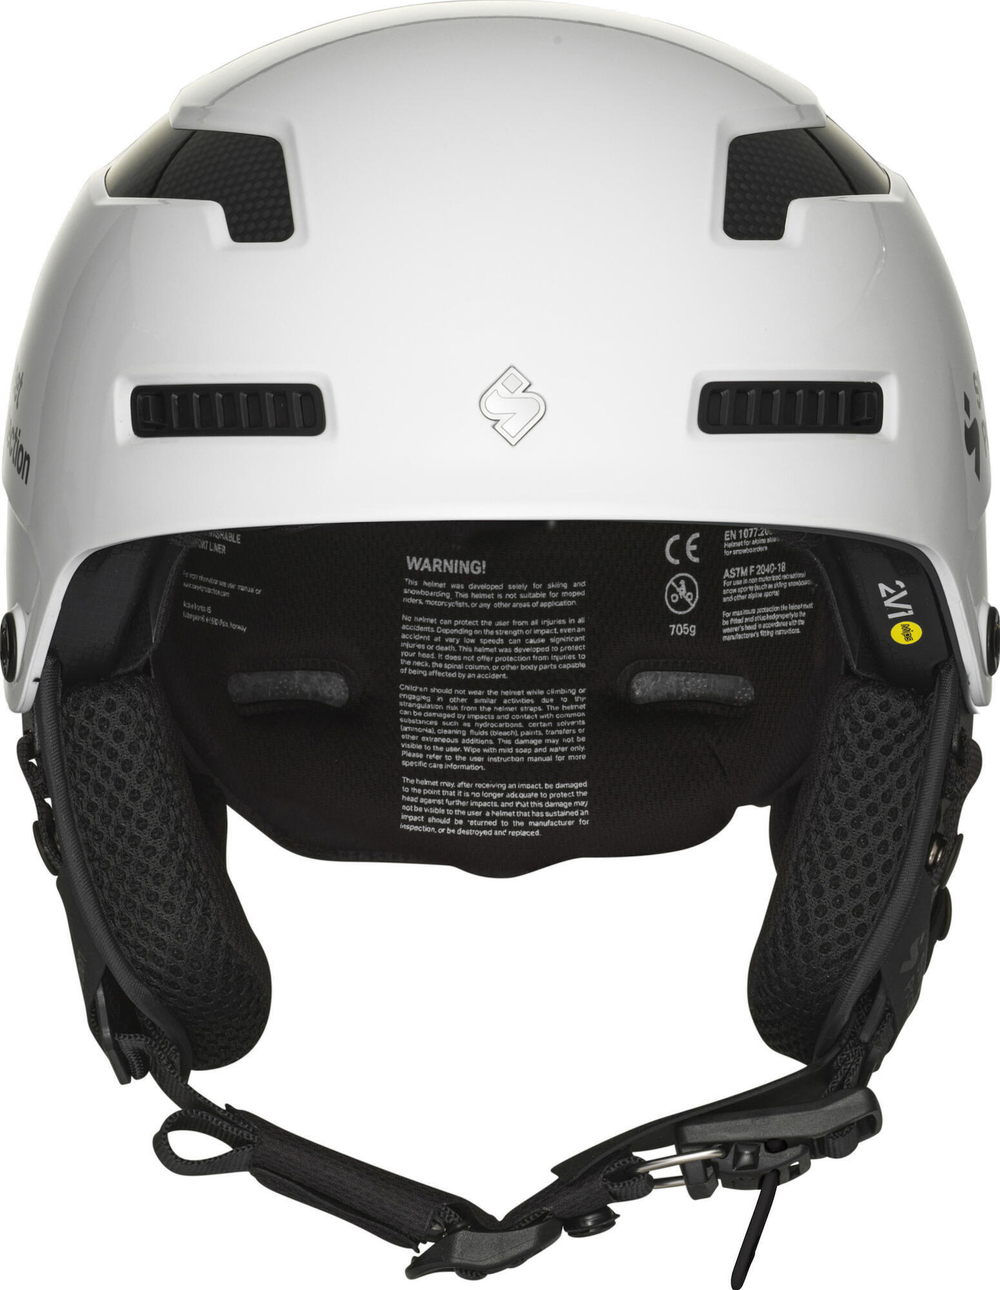 SWEET PROTECTION шлем горнолыжный 840095 Trooper 2Vi SL Mips Helmet GSWHT с черной дугой